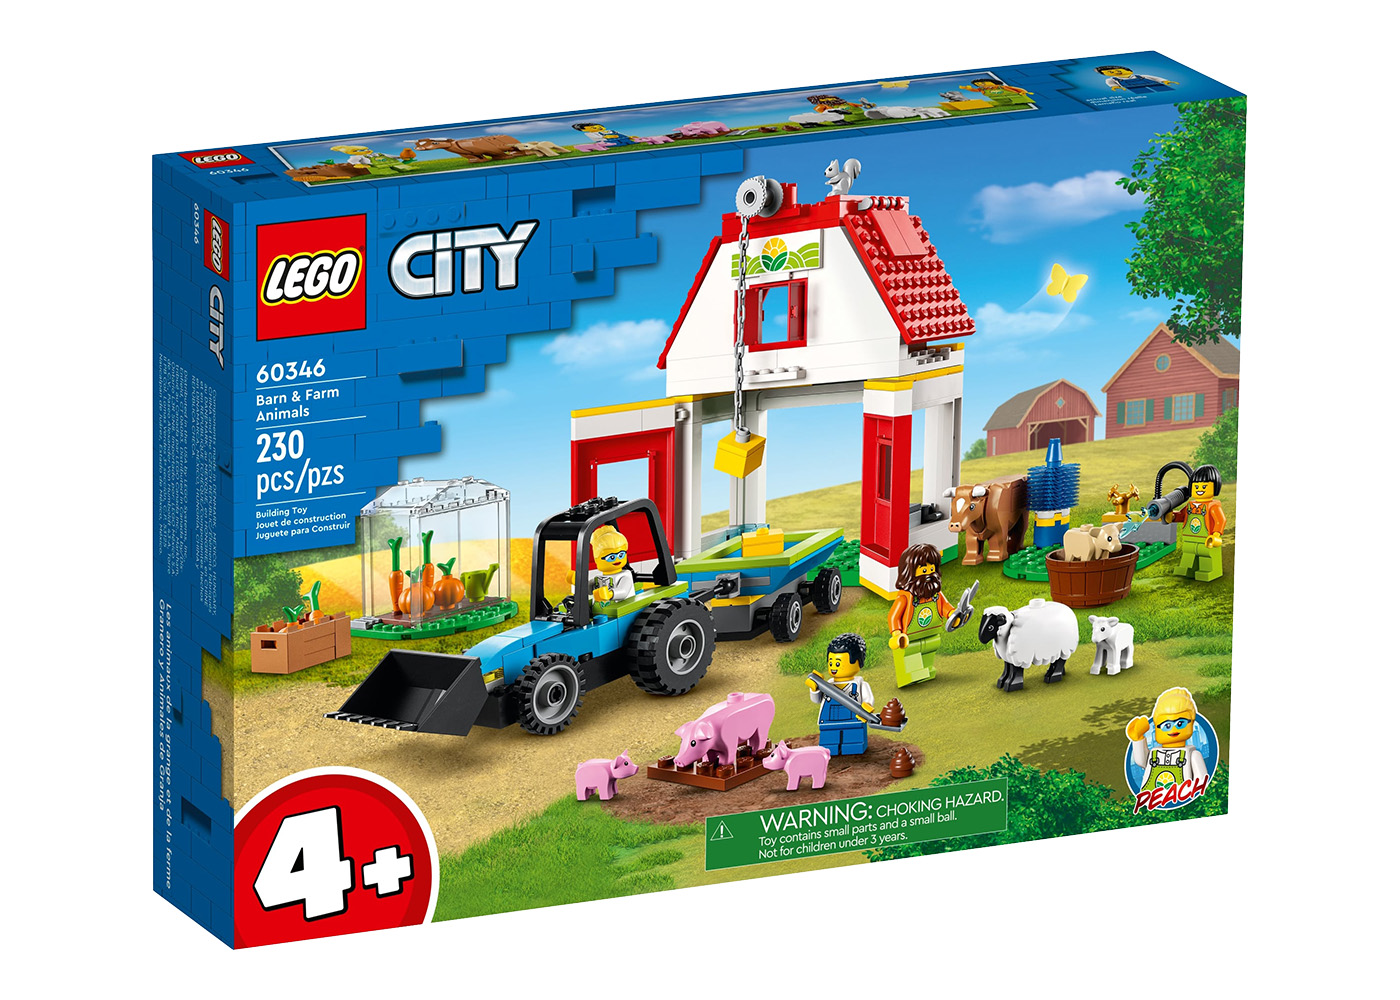 LEGO City Barn and Farm Animals Set 60346 - JP